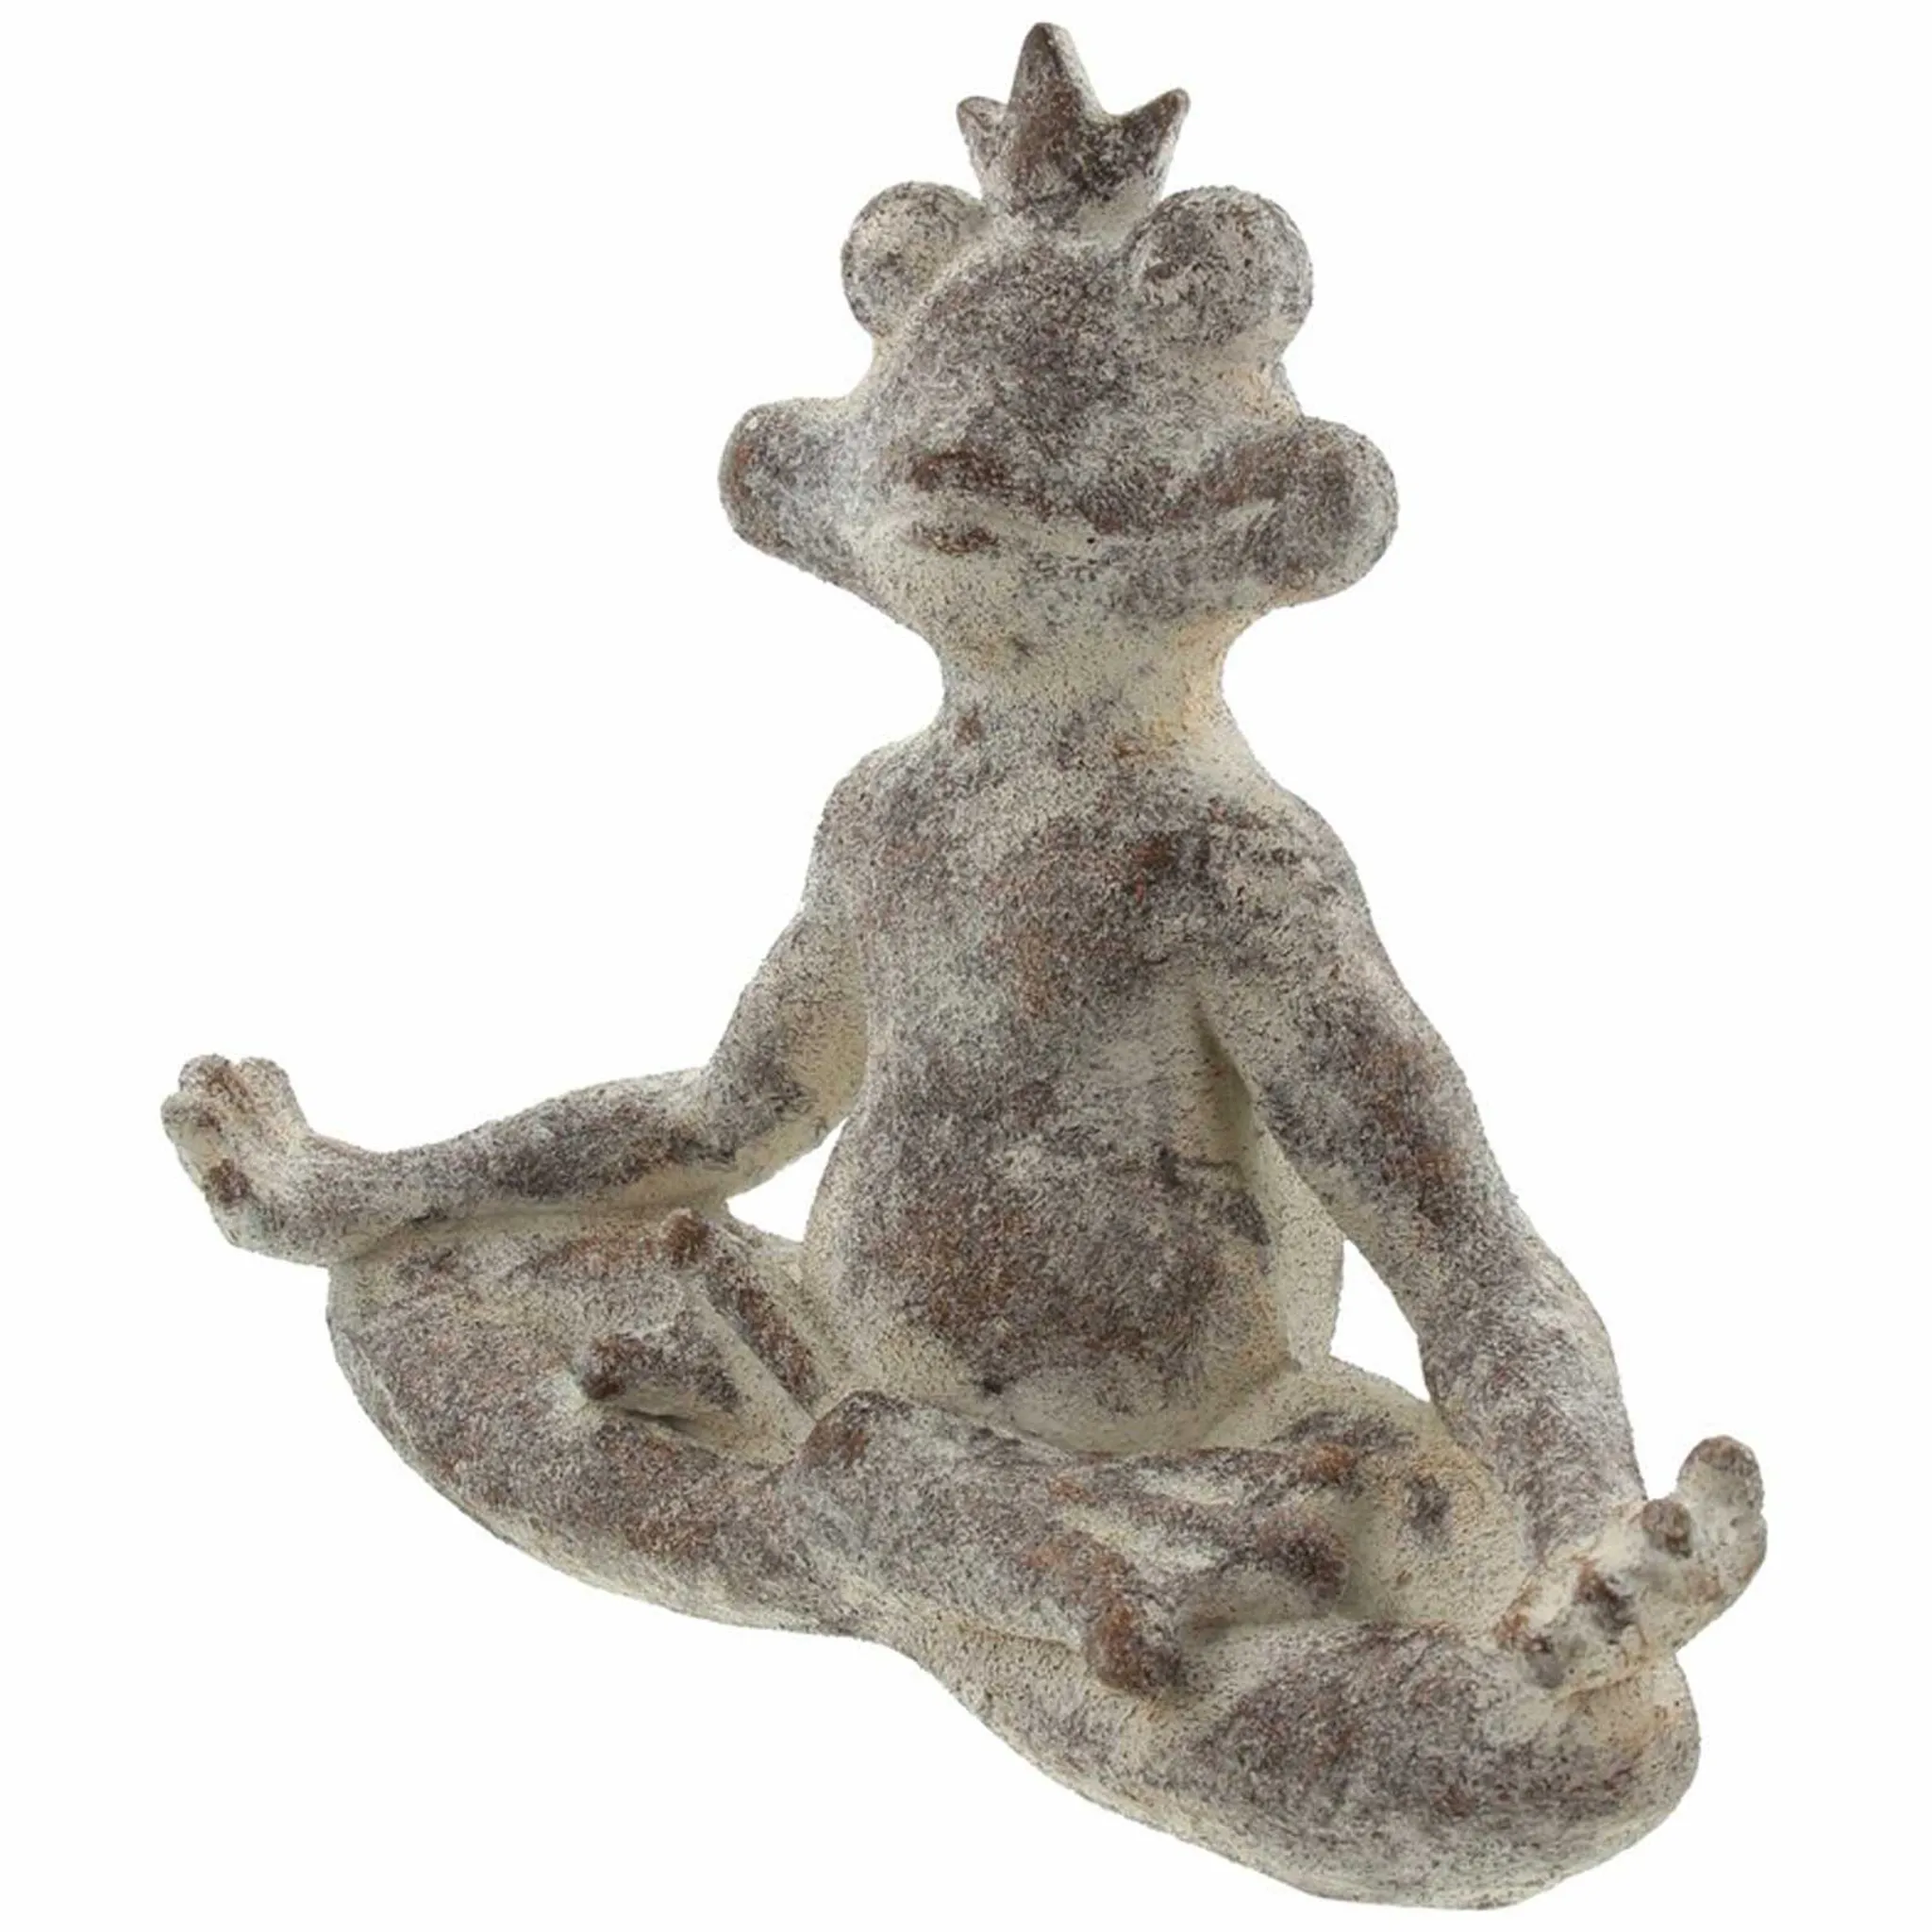 SIDCO Froschkönig Frosch Gartendeko Yoga